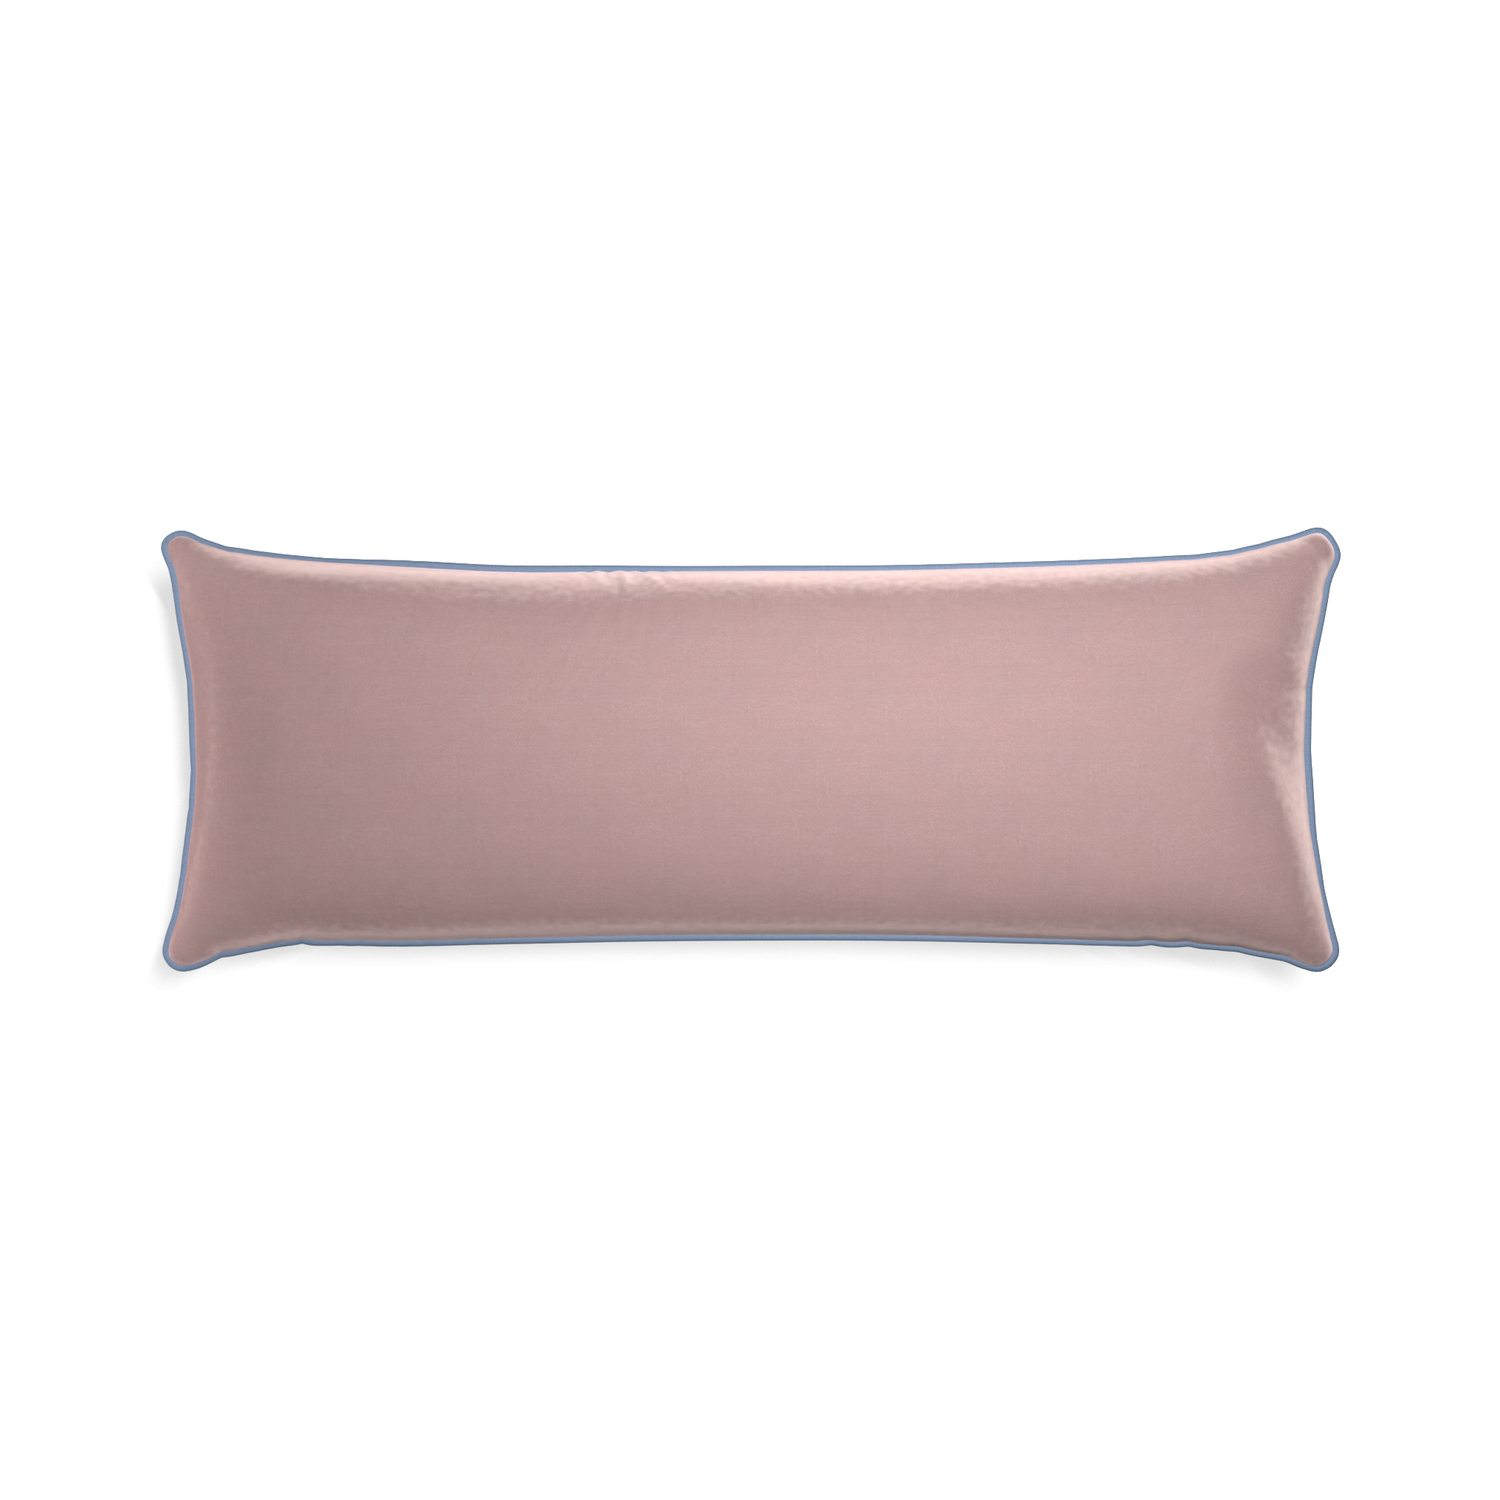 Xl-lumbar mauve velvet custom pillow with sky piping on white background